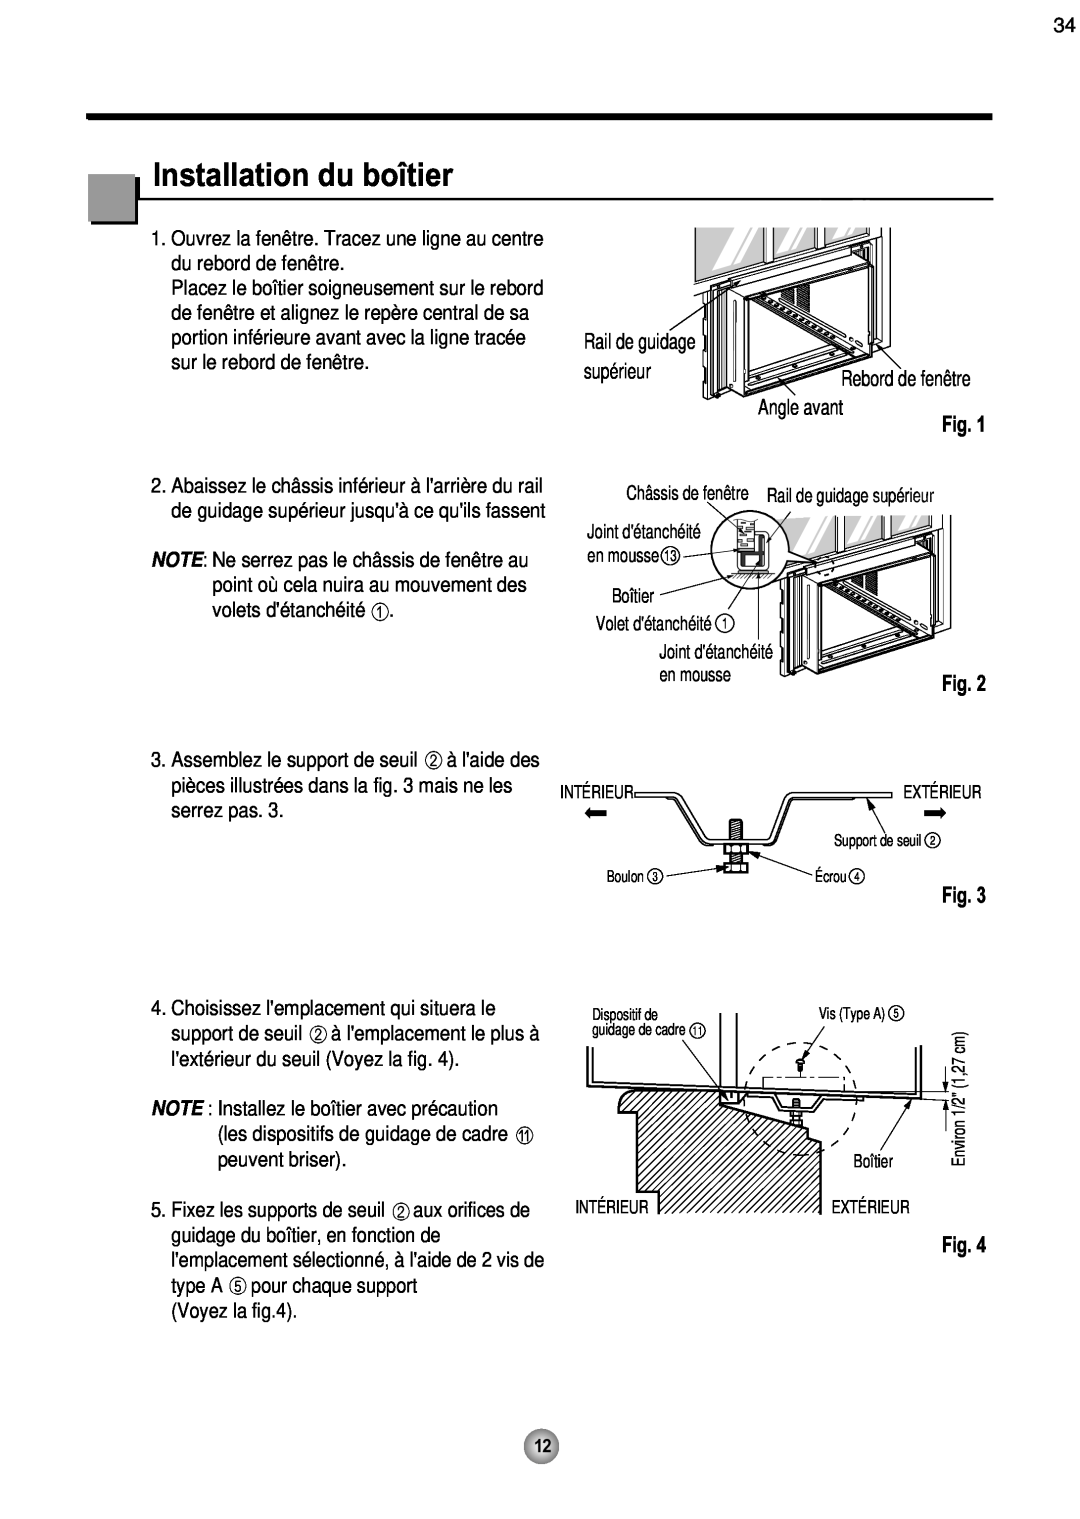 Friedrich CP08 operation manual Installation du boîtier, Rebord de fenêtre Angle avant 